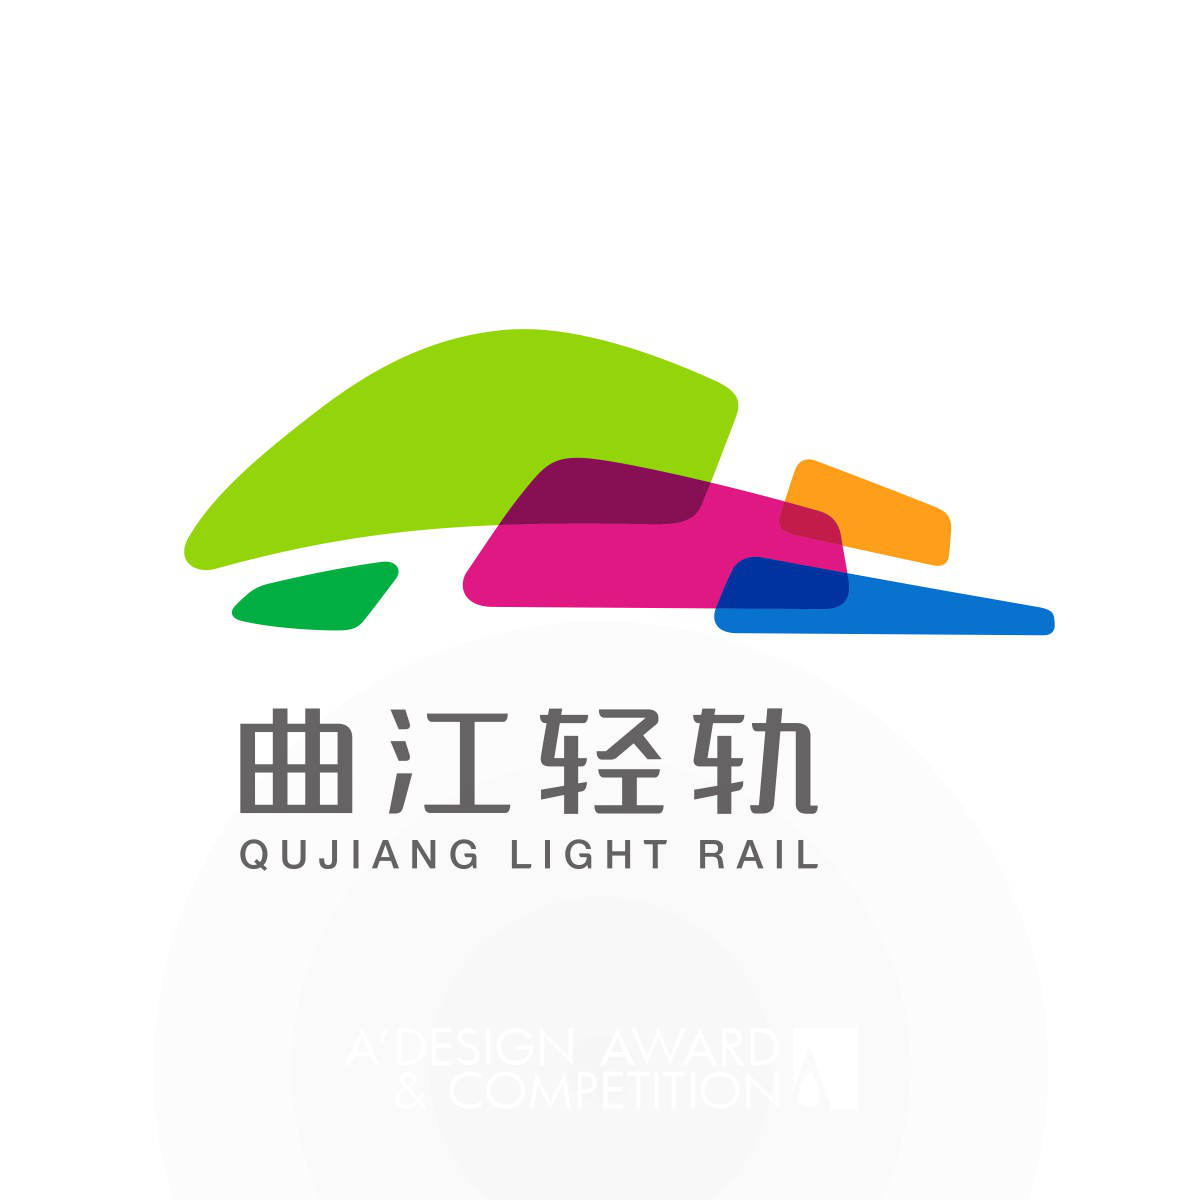 Qujiang Light Rail Brand Design by Yong Huang